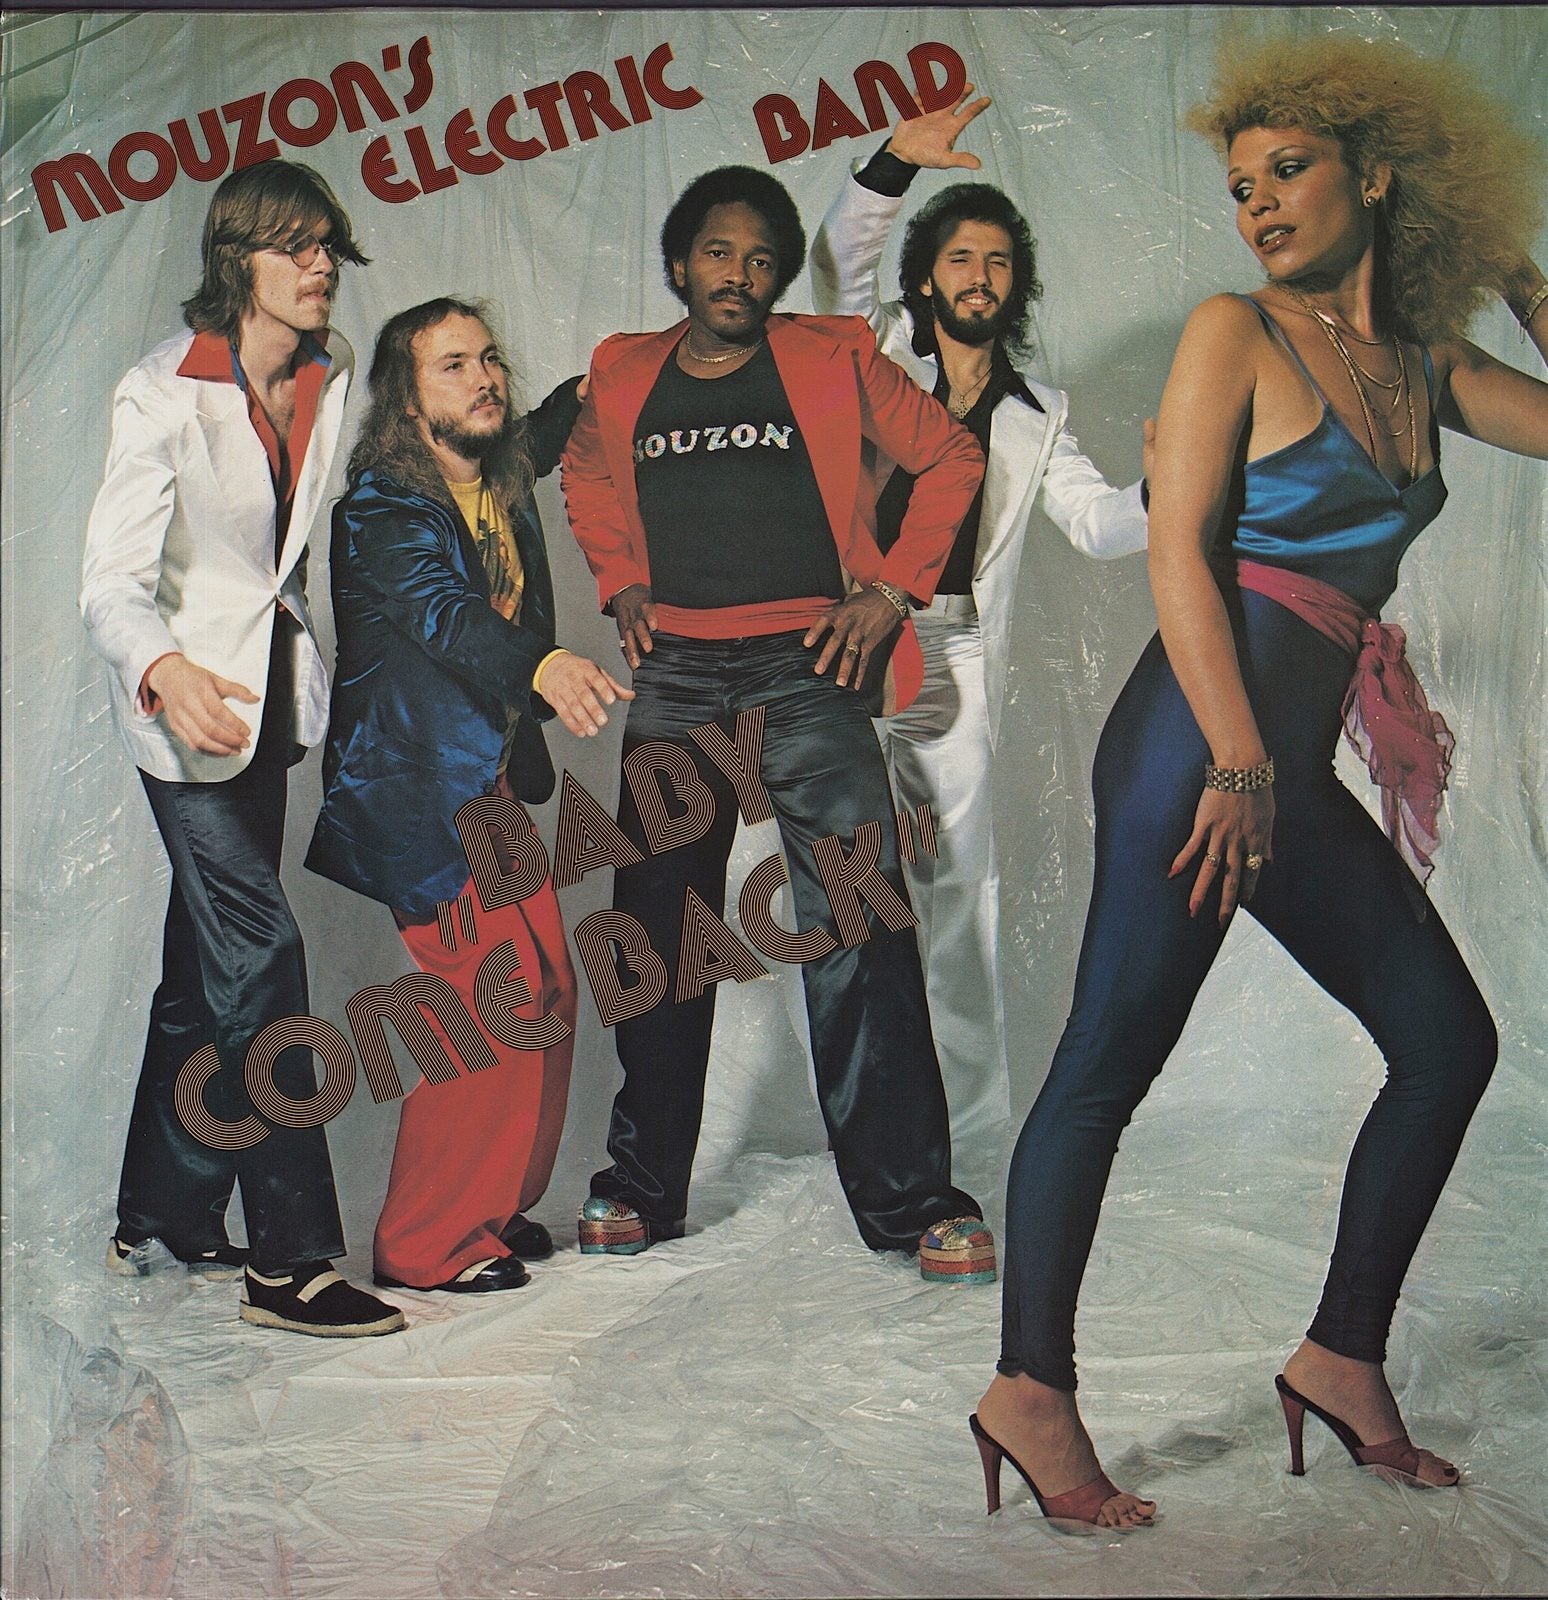 Mouzon's Electric Band ‎- Baby Come Back Vinyl LP